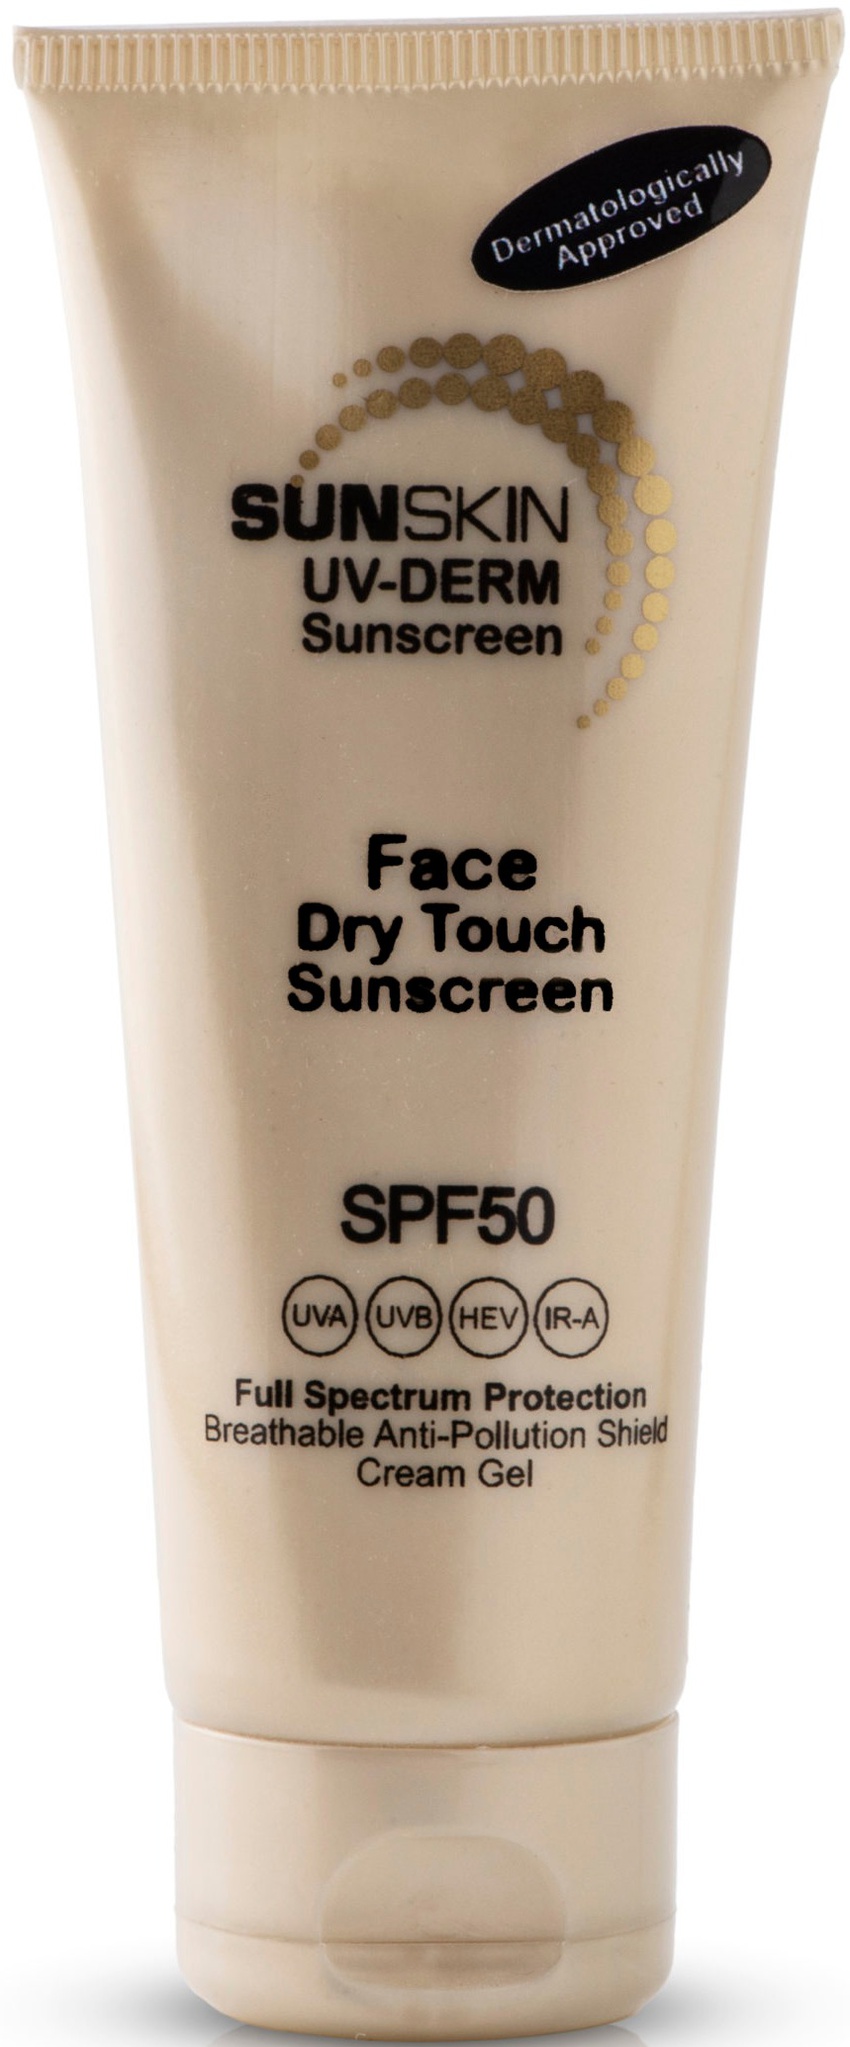 Sunskin UV-derm SPF50 Face Dry Touch Cream-gel Sunscreen